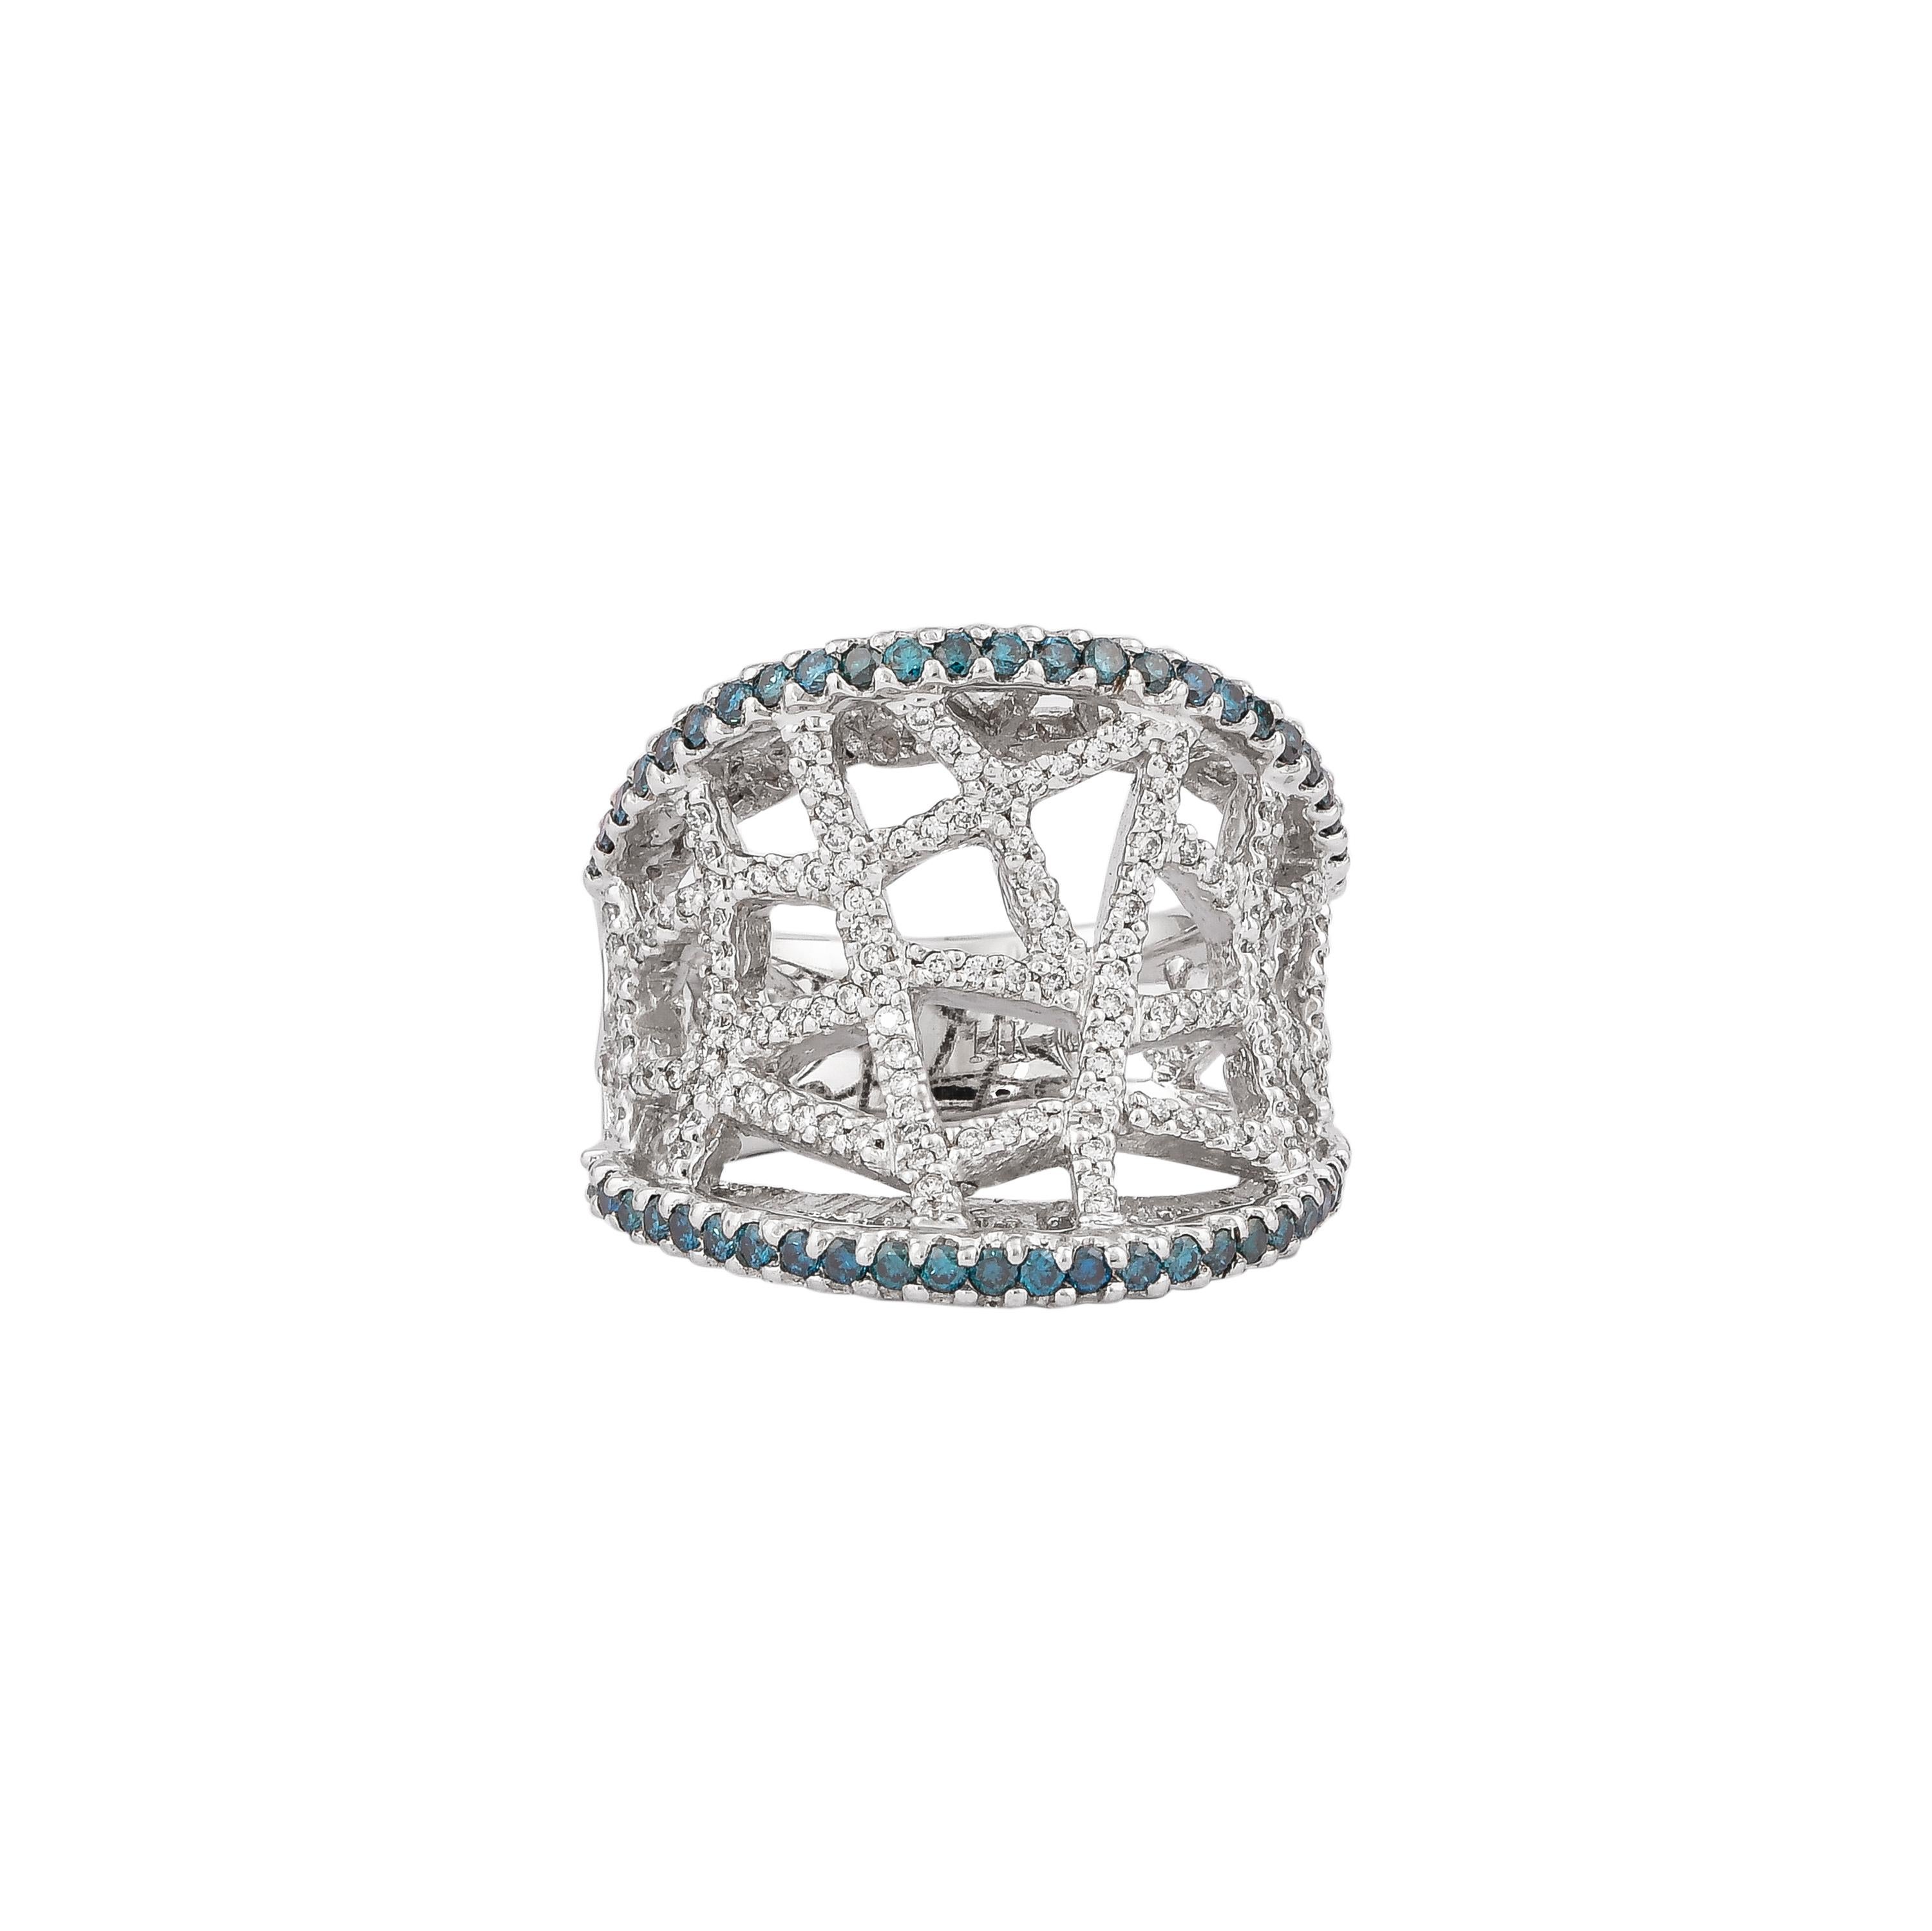 1.8 Carat Blue & White Diamond Ring in 14 Karat White Gold For Sale 1